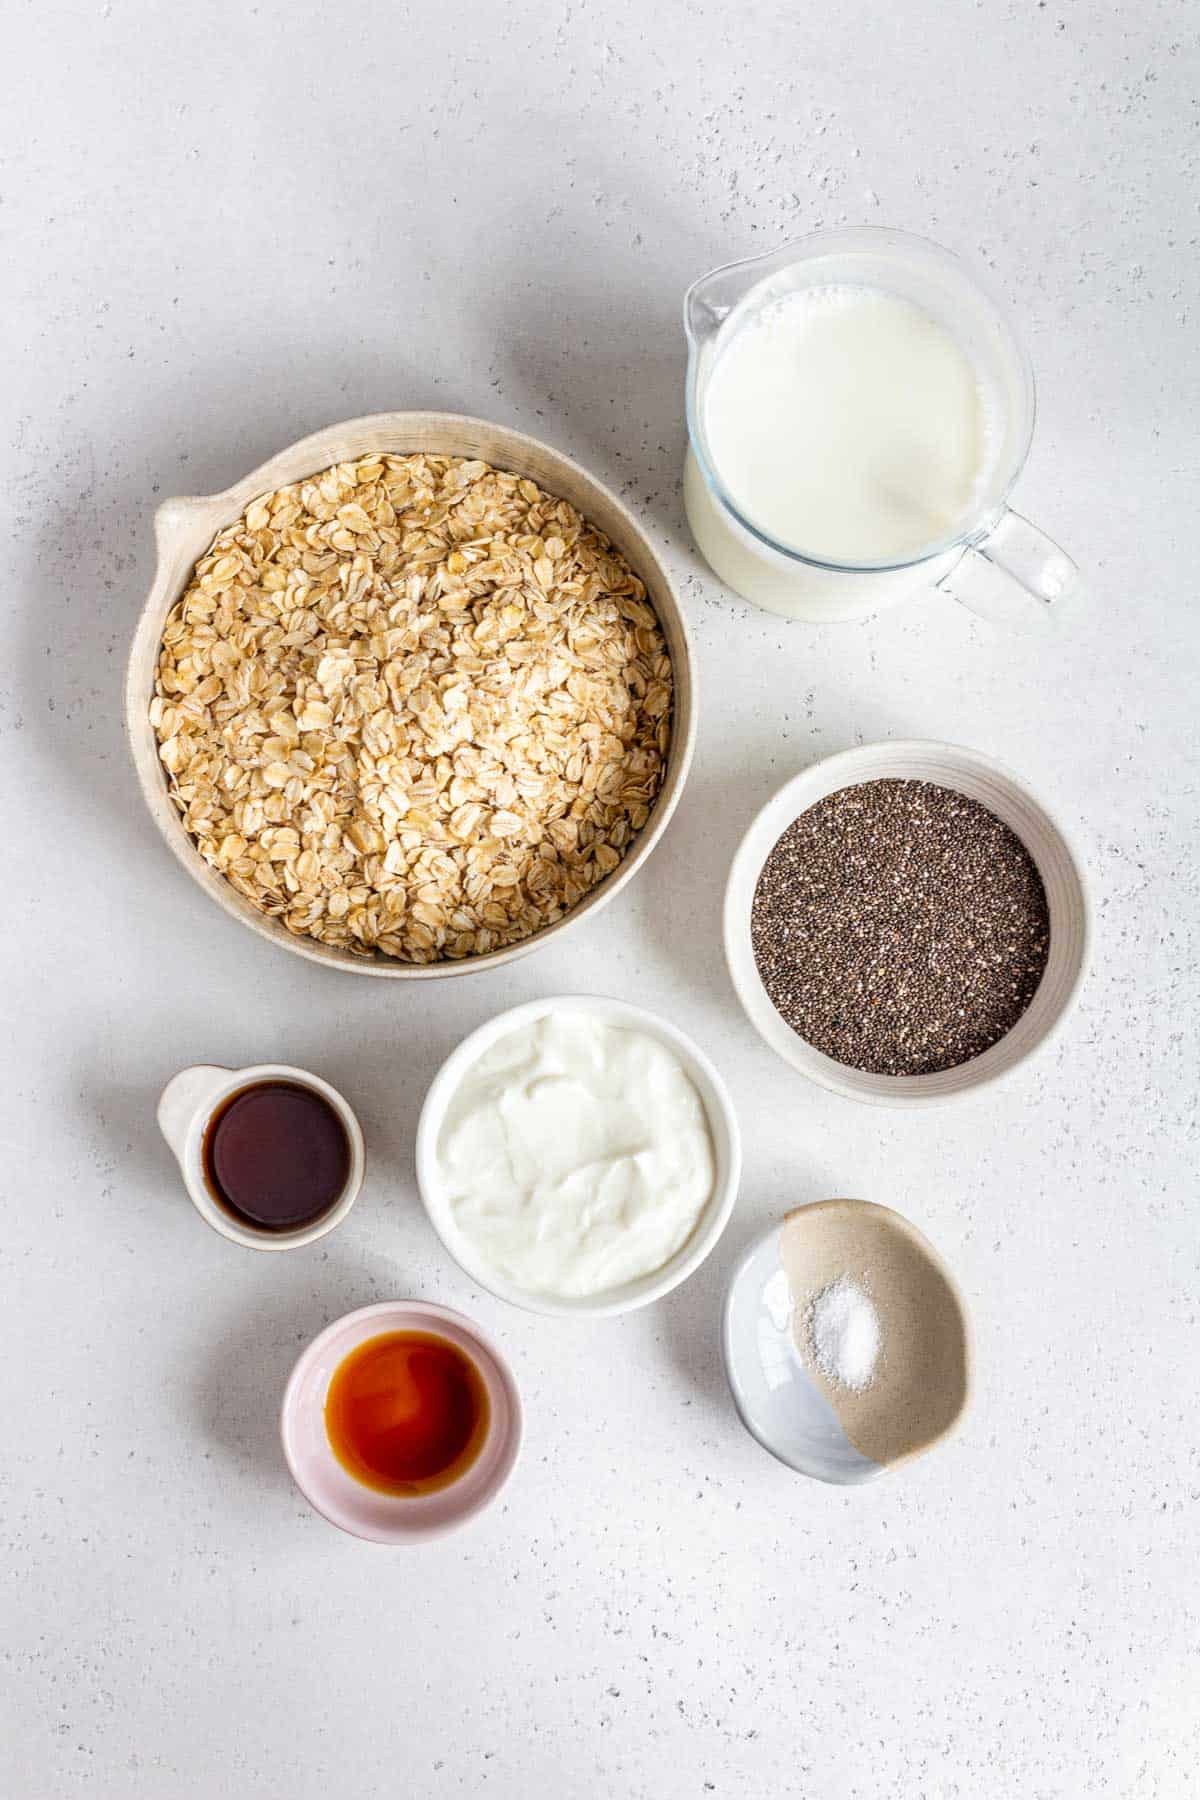 Ingredients needed to make vanilla overnight oats.